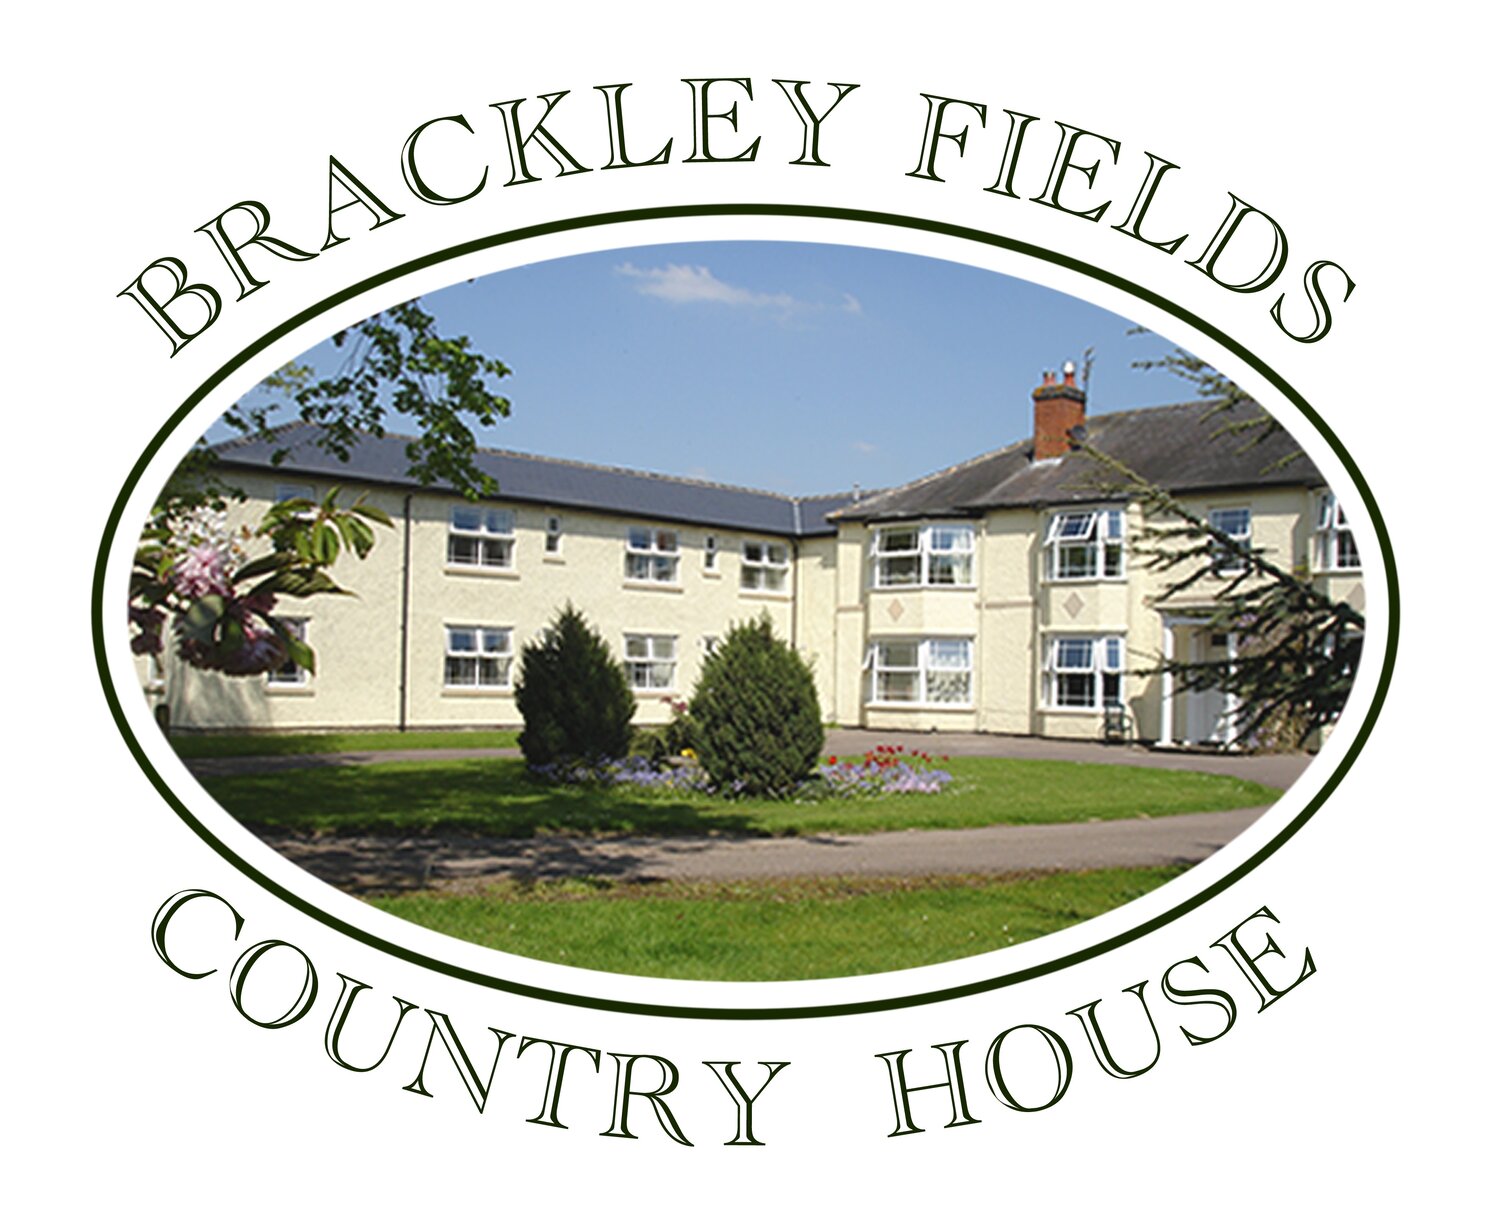 Brackley Fields Country House